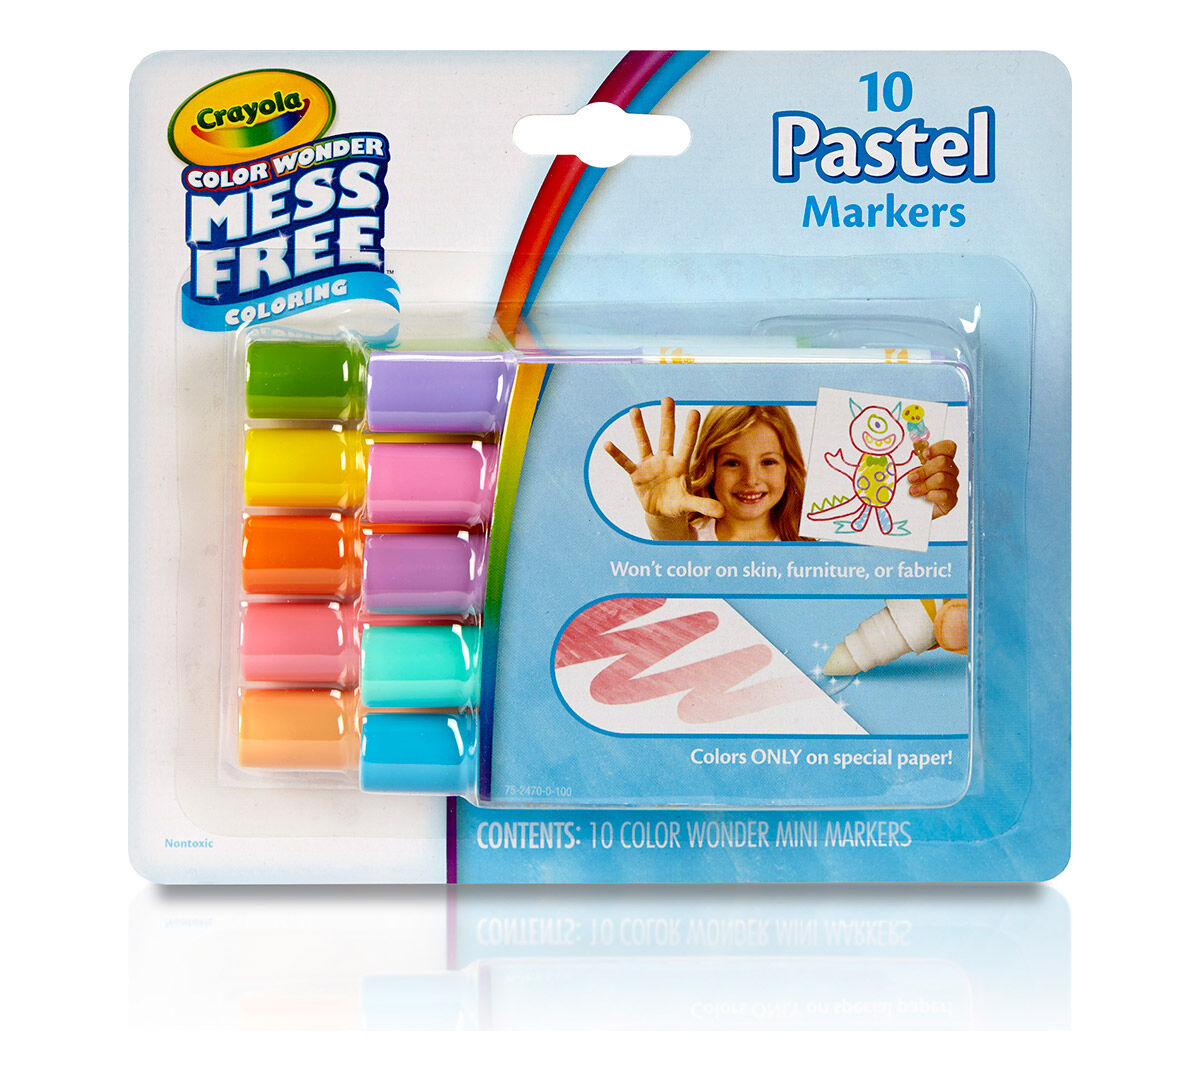 Crayola Color Wonder Mess Free Bundle Color Wonder Mess Free Art Desk Color Wonder Mess Free Pastel Markers 10 Count